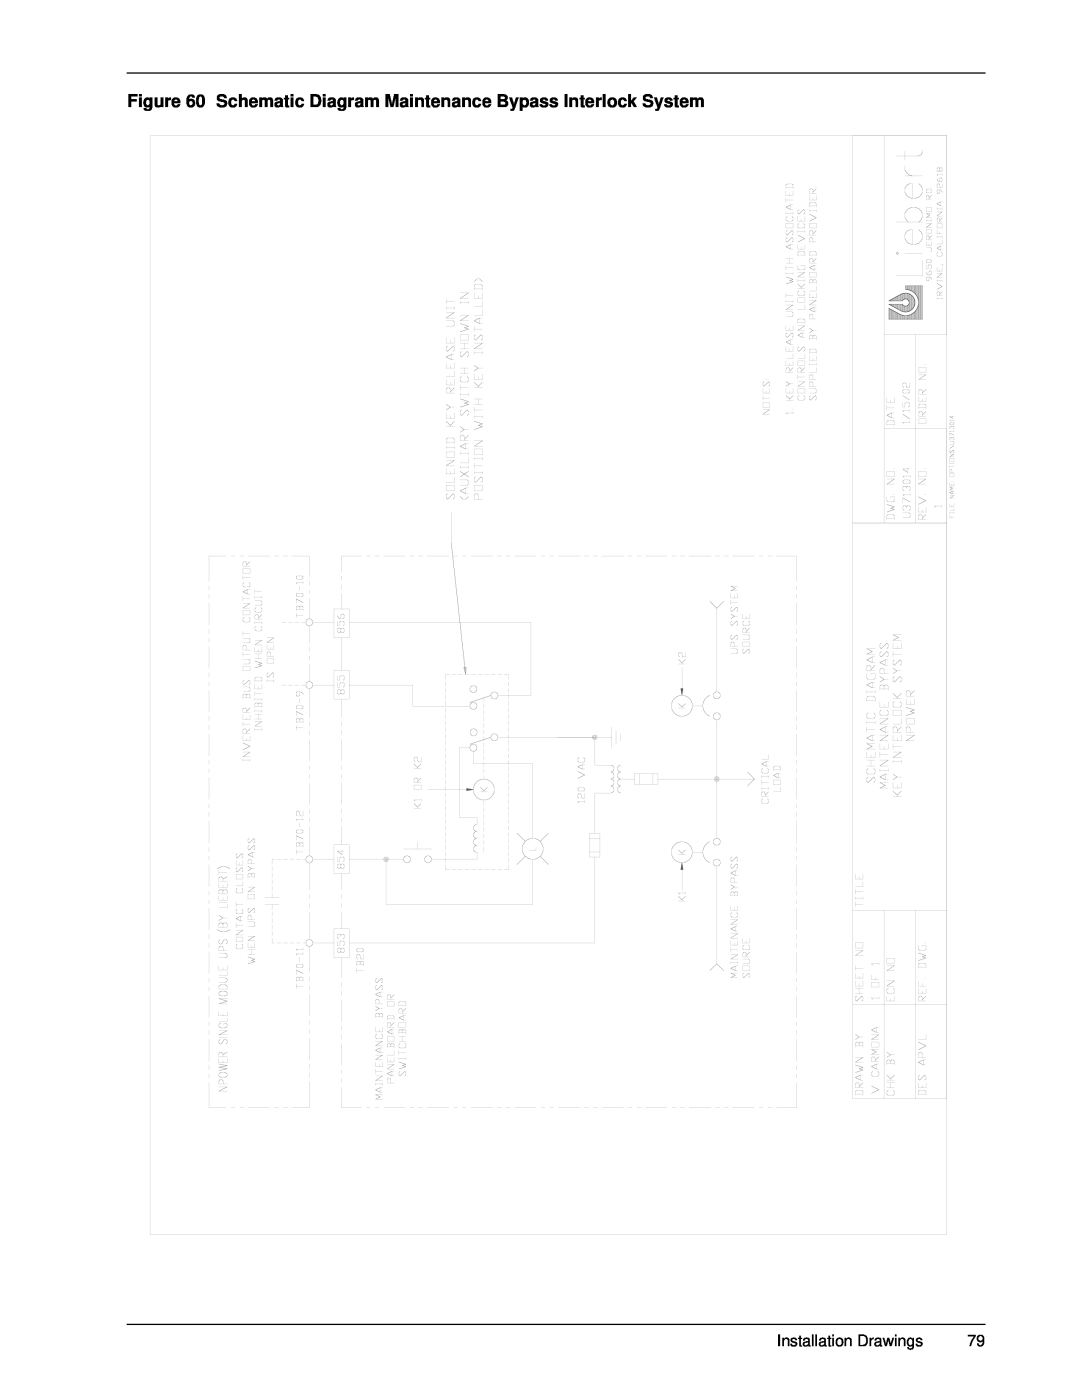 Emerson 30-130 kVA installation manual Schematic Diagram Maintenance Bypass Interlock System, Installation Drawings 